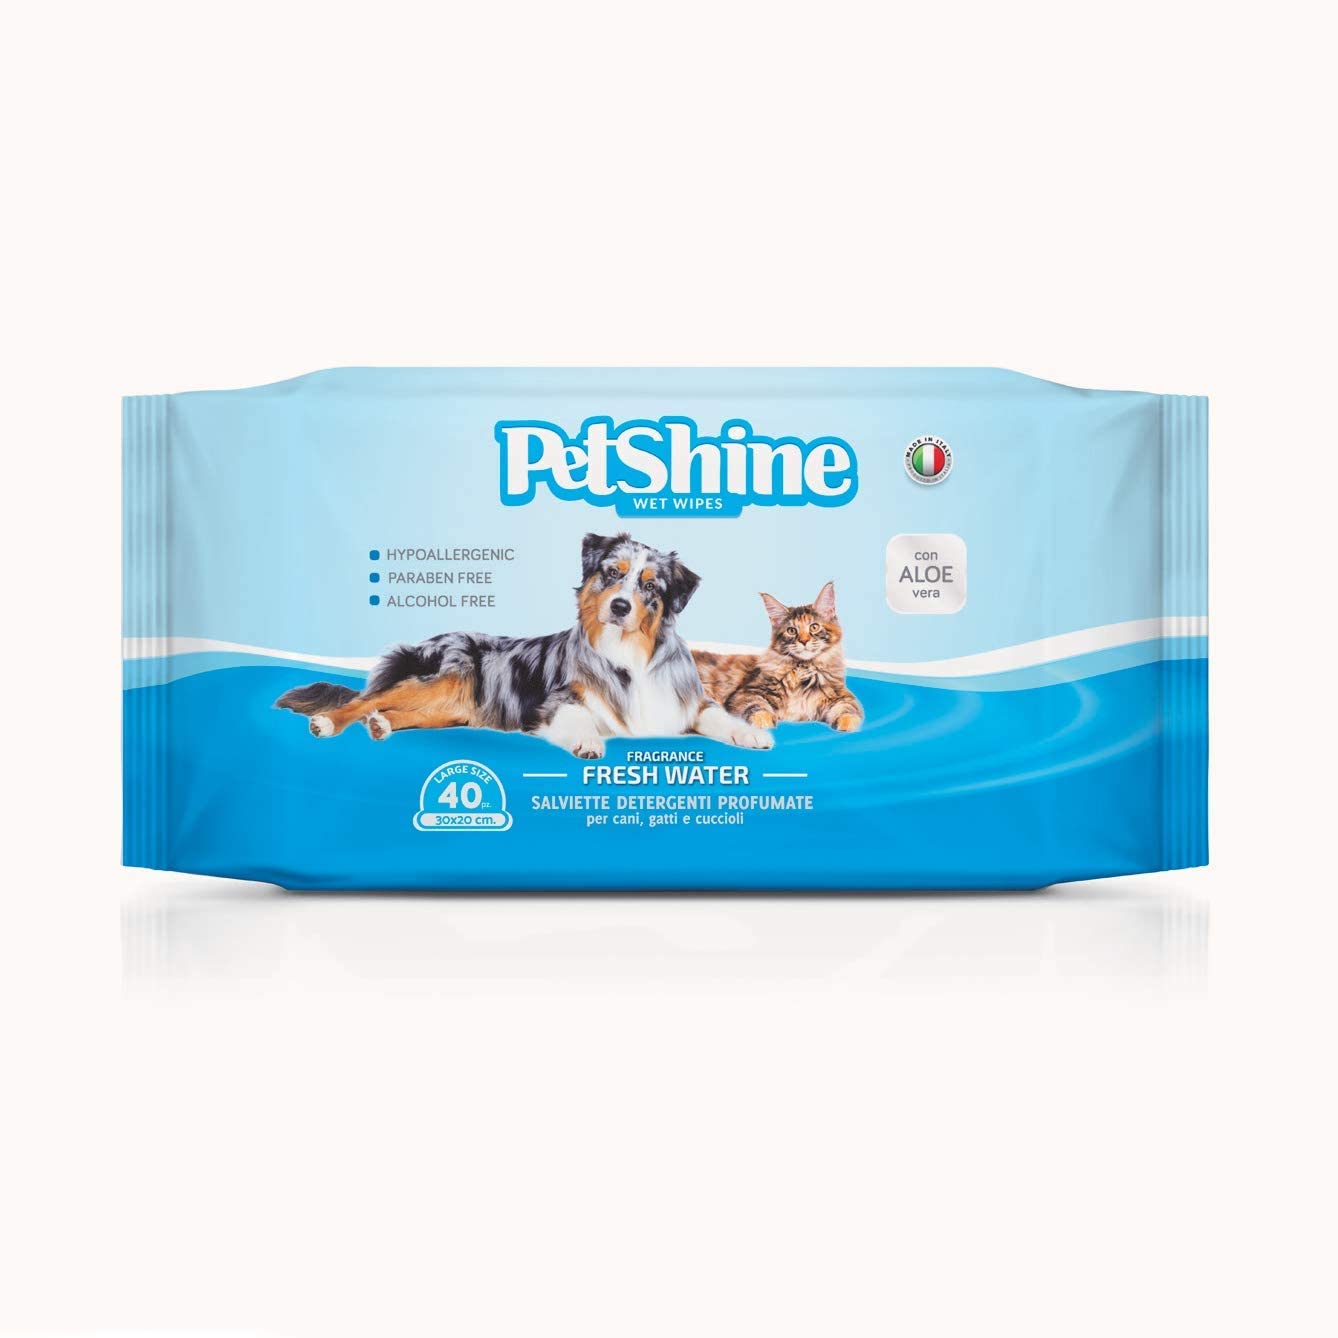 Petshine Toallitas Fresh Water para perro y gato